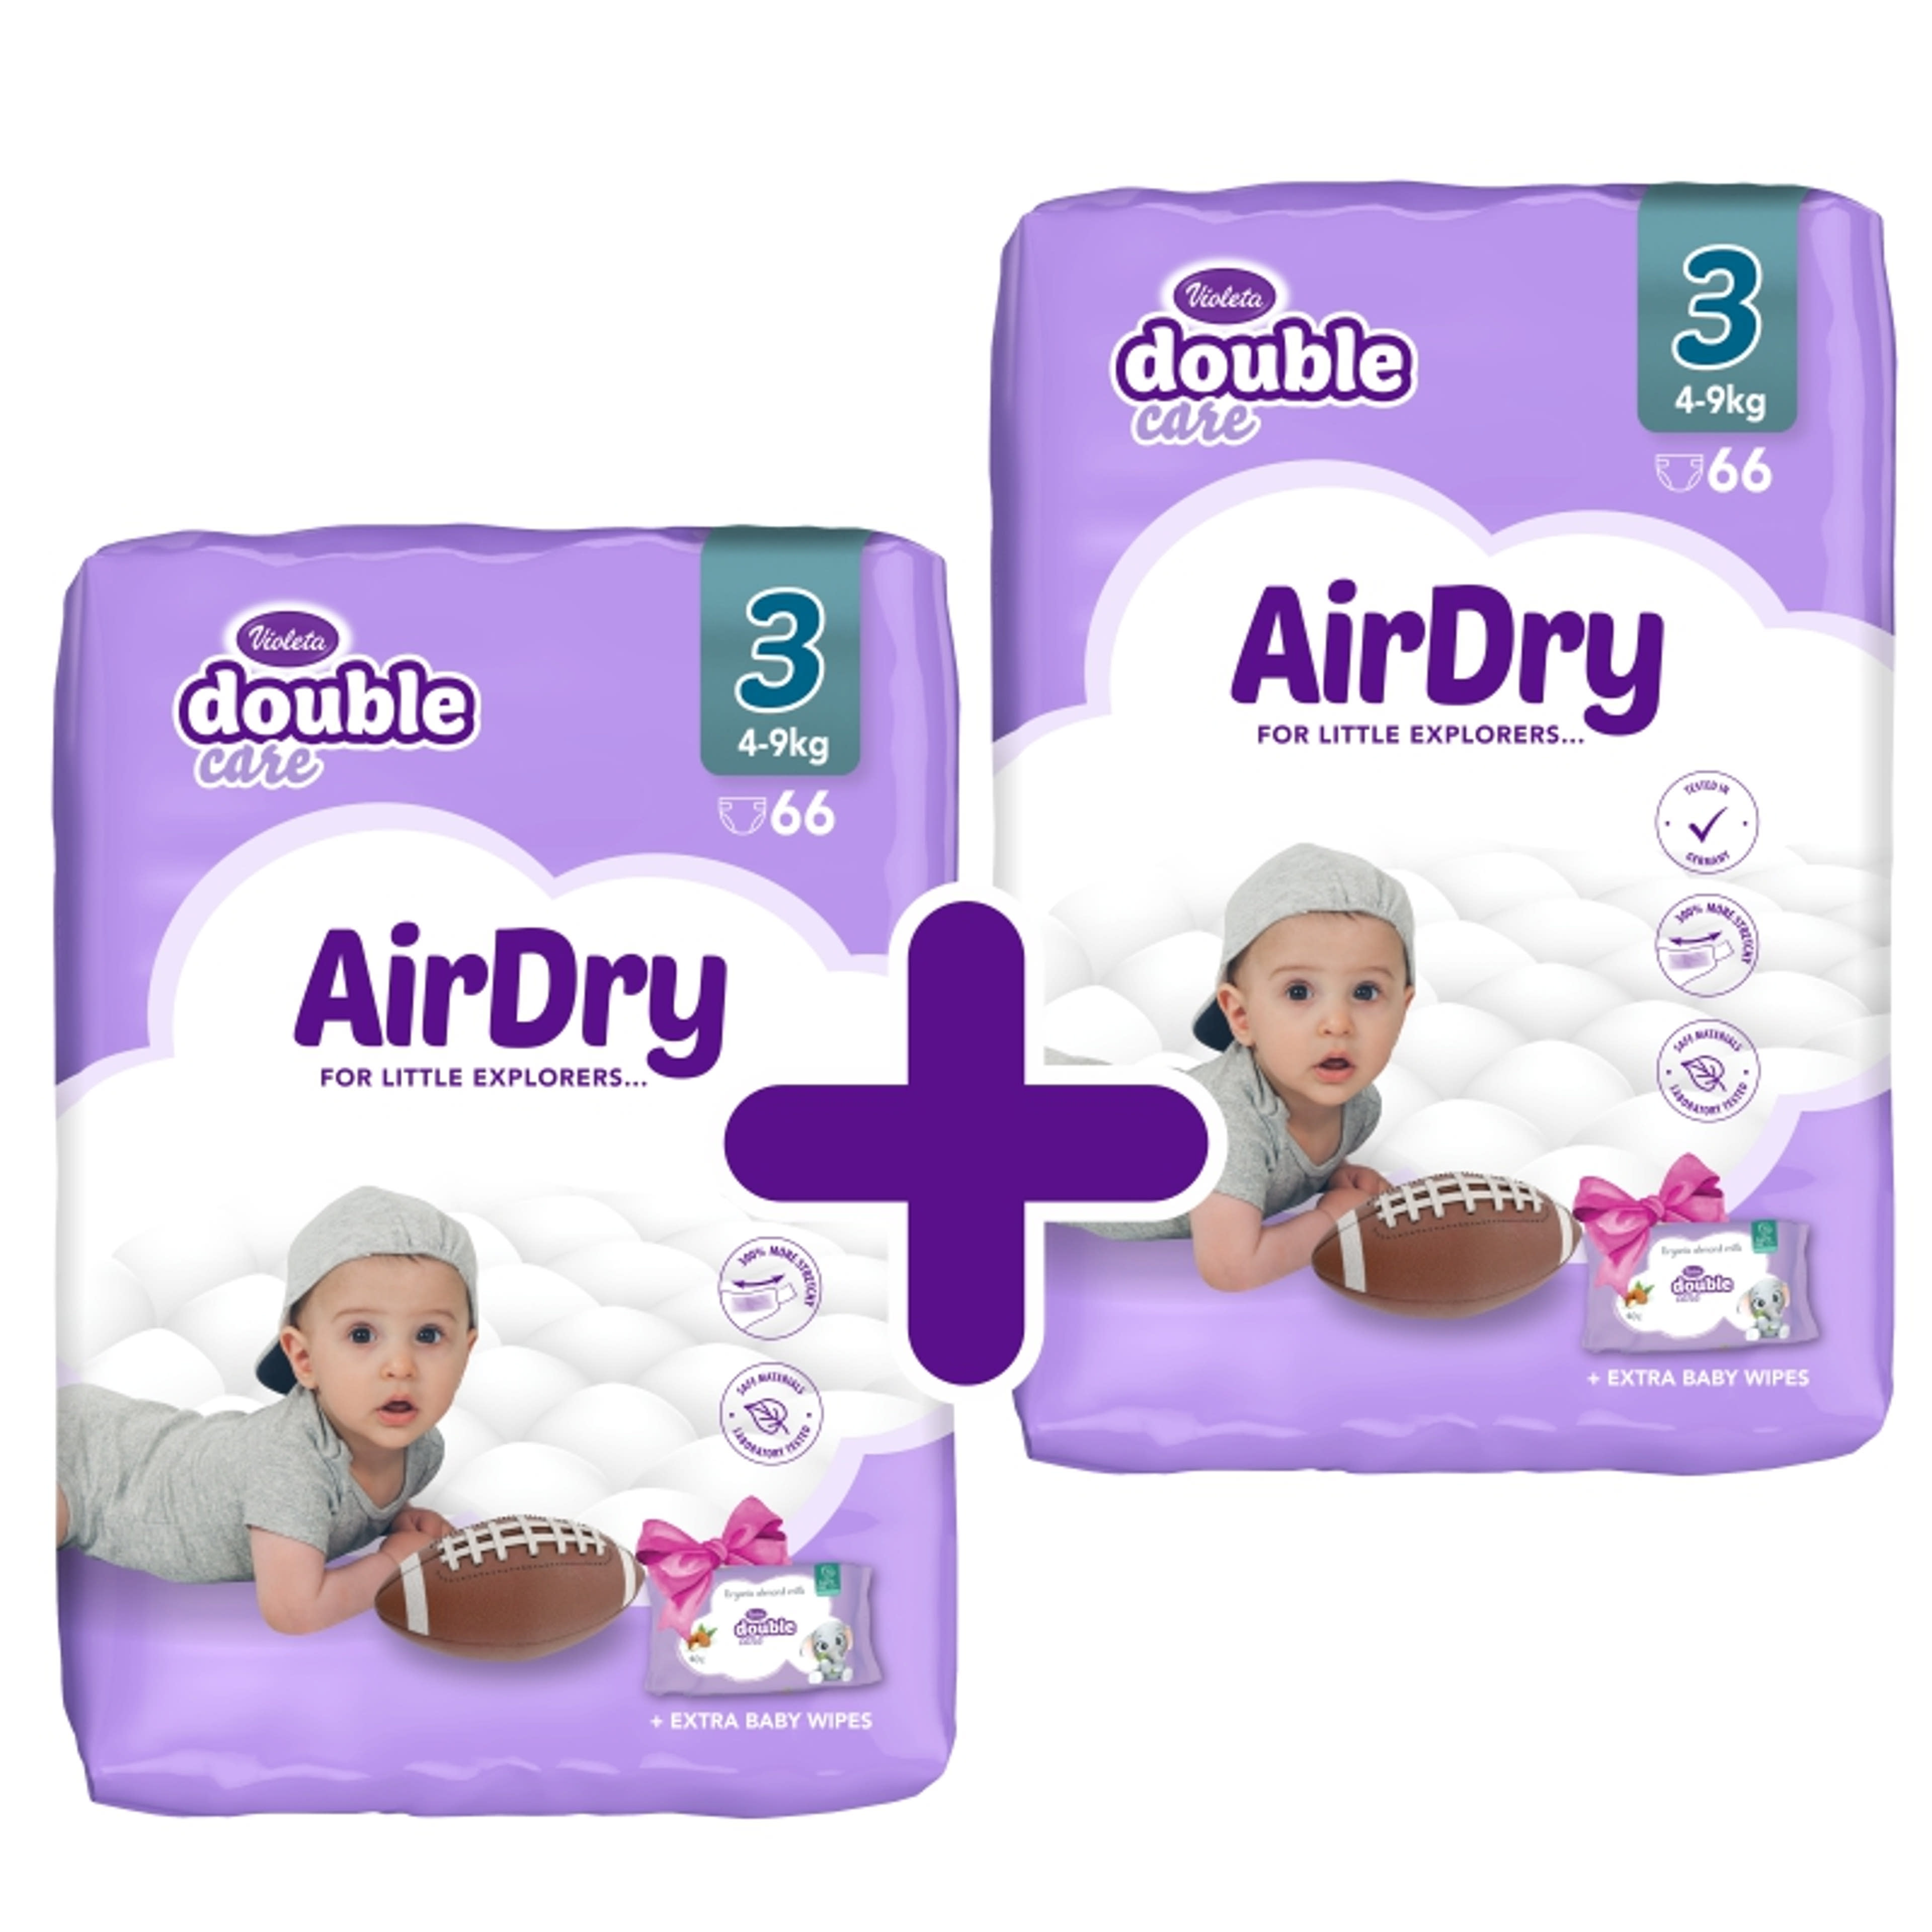 Violeta Double Care Air Dry 3-as méret 4-9 kg nadrágpelenka csomag